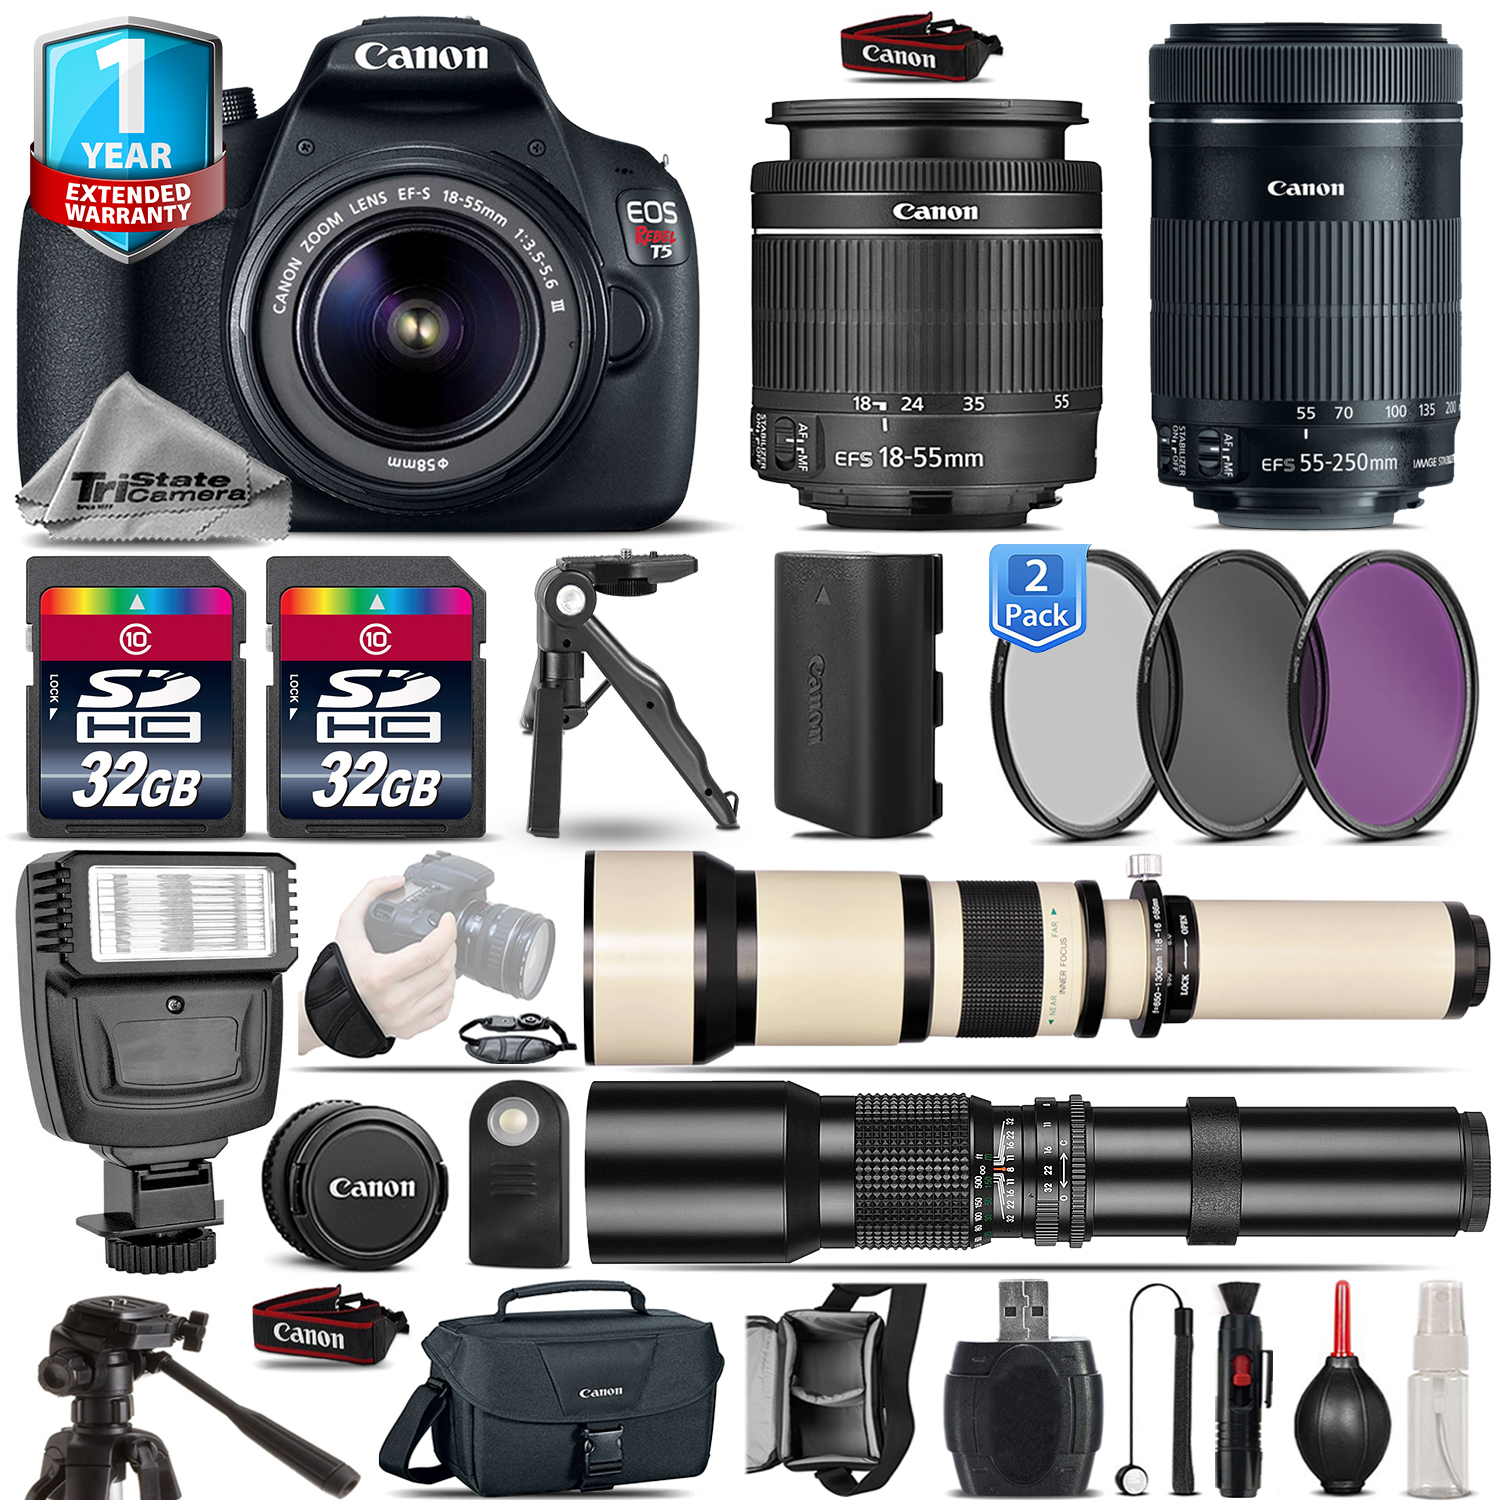 EOS Rebel T5 Camera + 18-55mm DC + 55-200mm IS + 1yr Warranty - 64GB Kit *FREE SHIPPING*